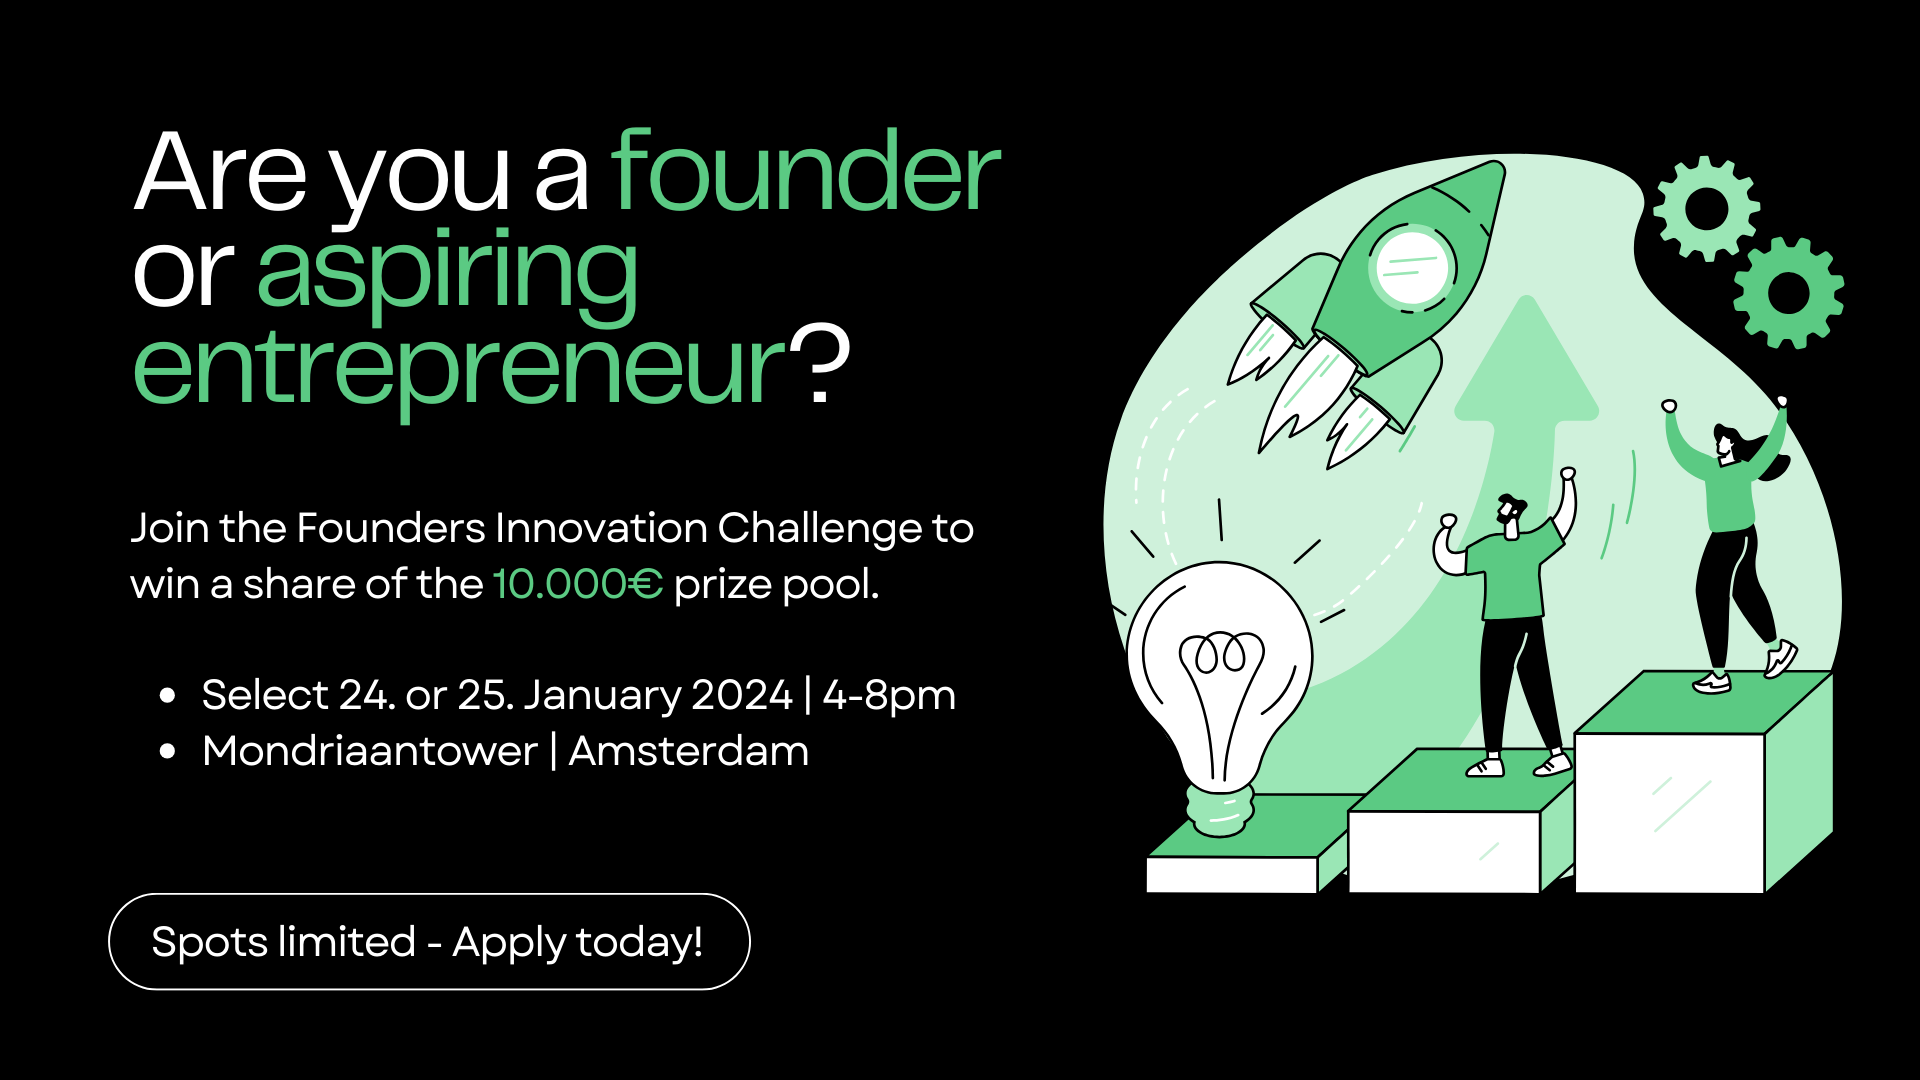 Are you a founder or aspiring entrepreneur?